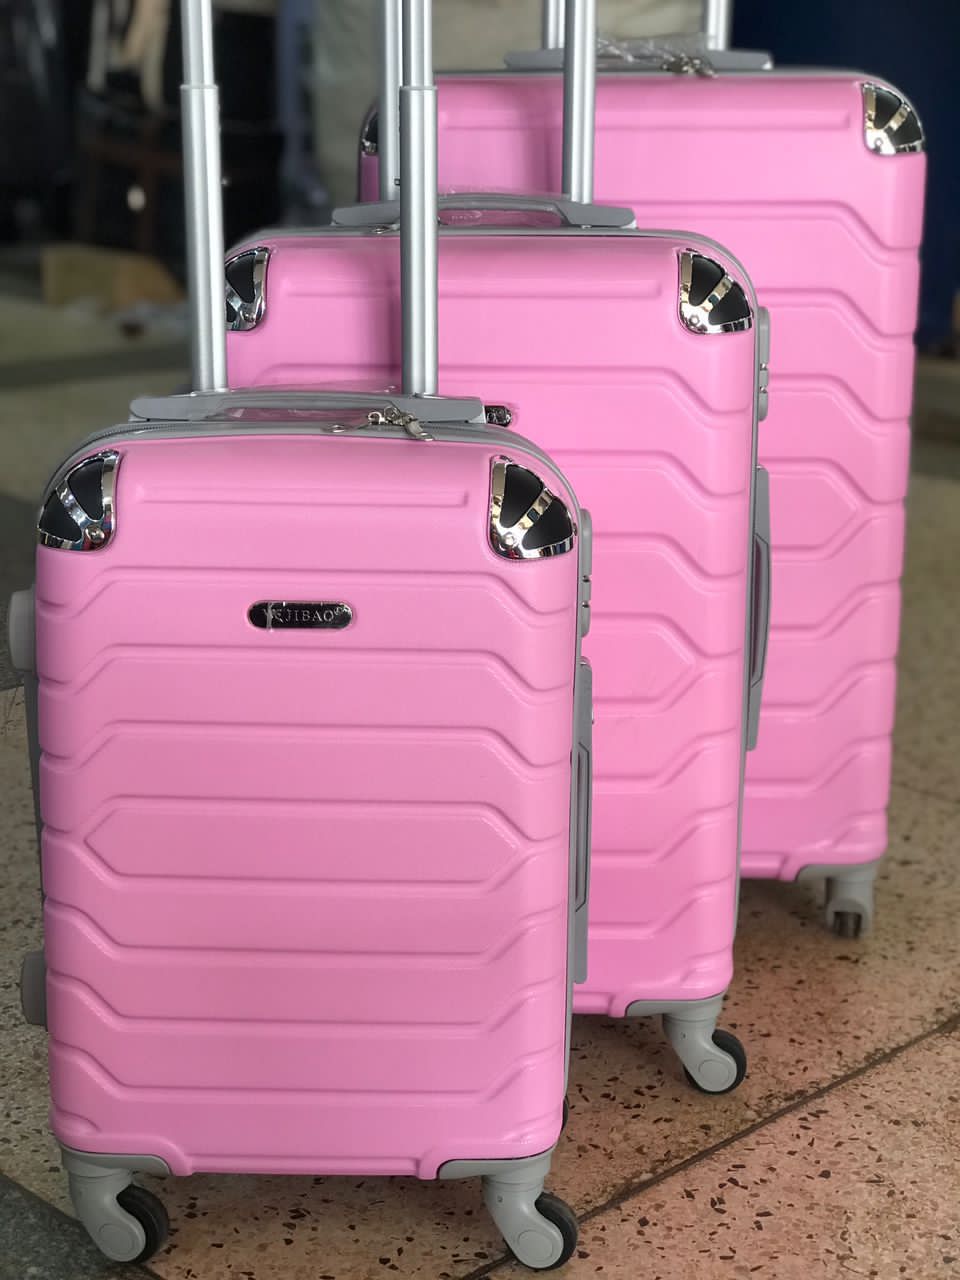 Plastic Luggage Spinner Suitcase With TSA Lock